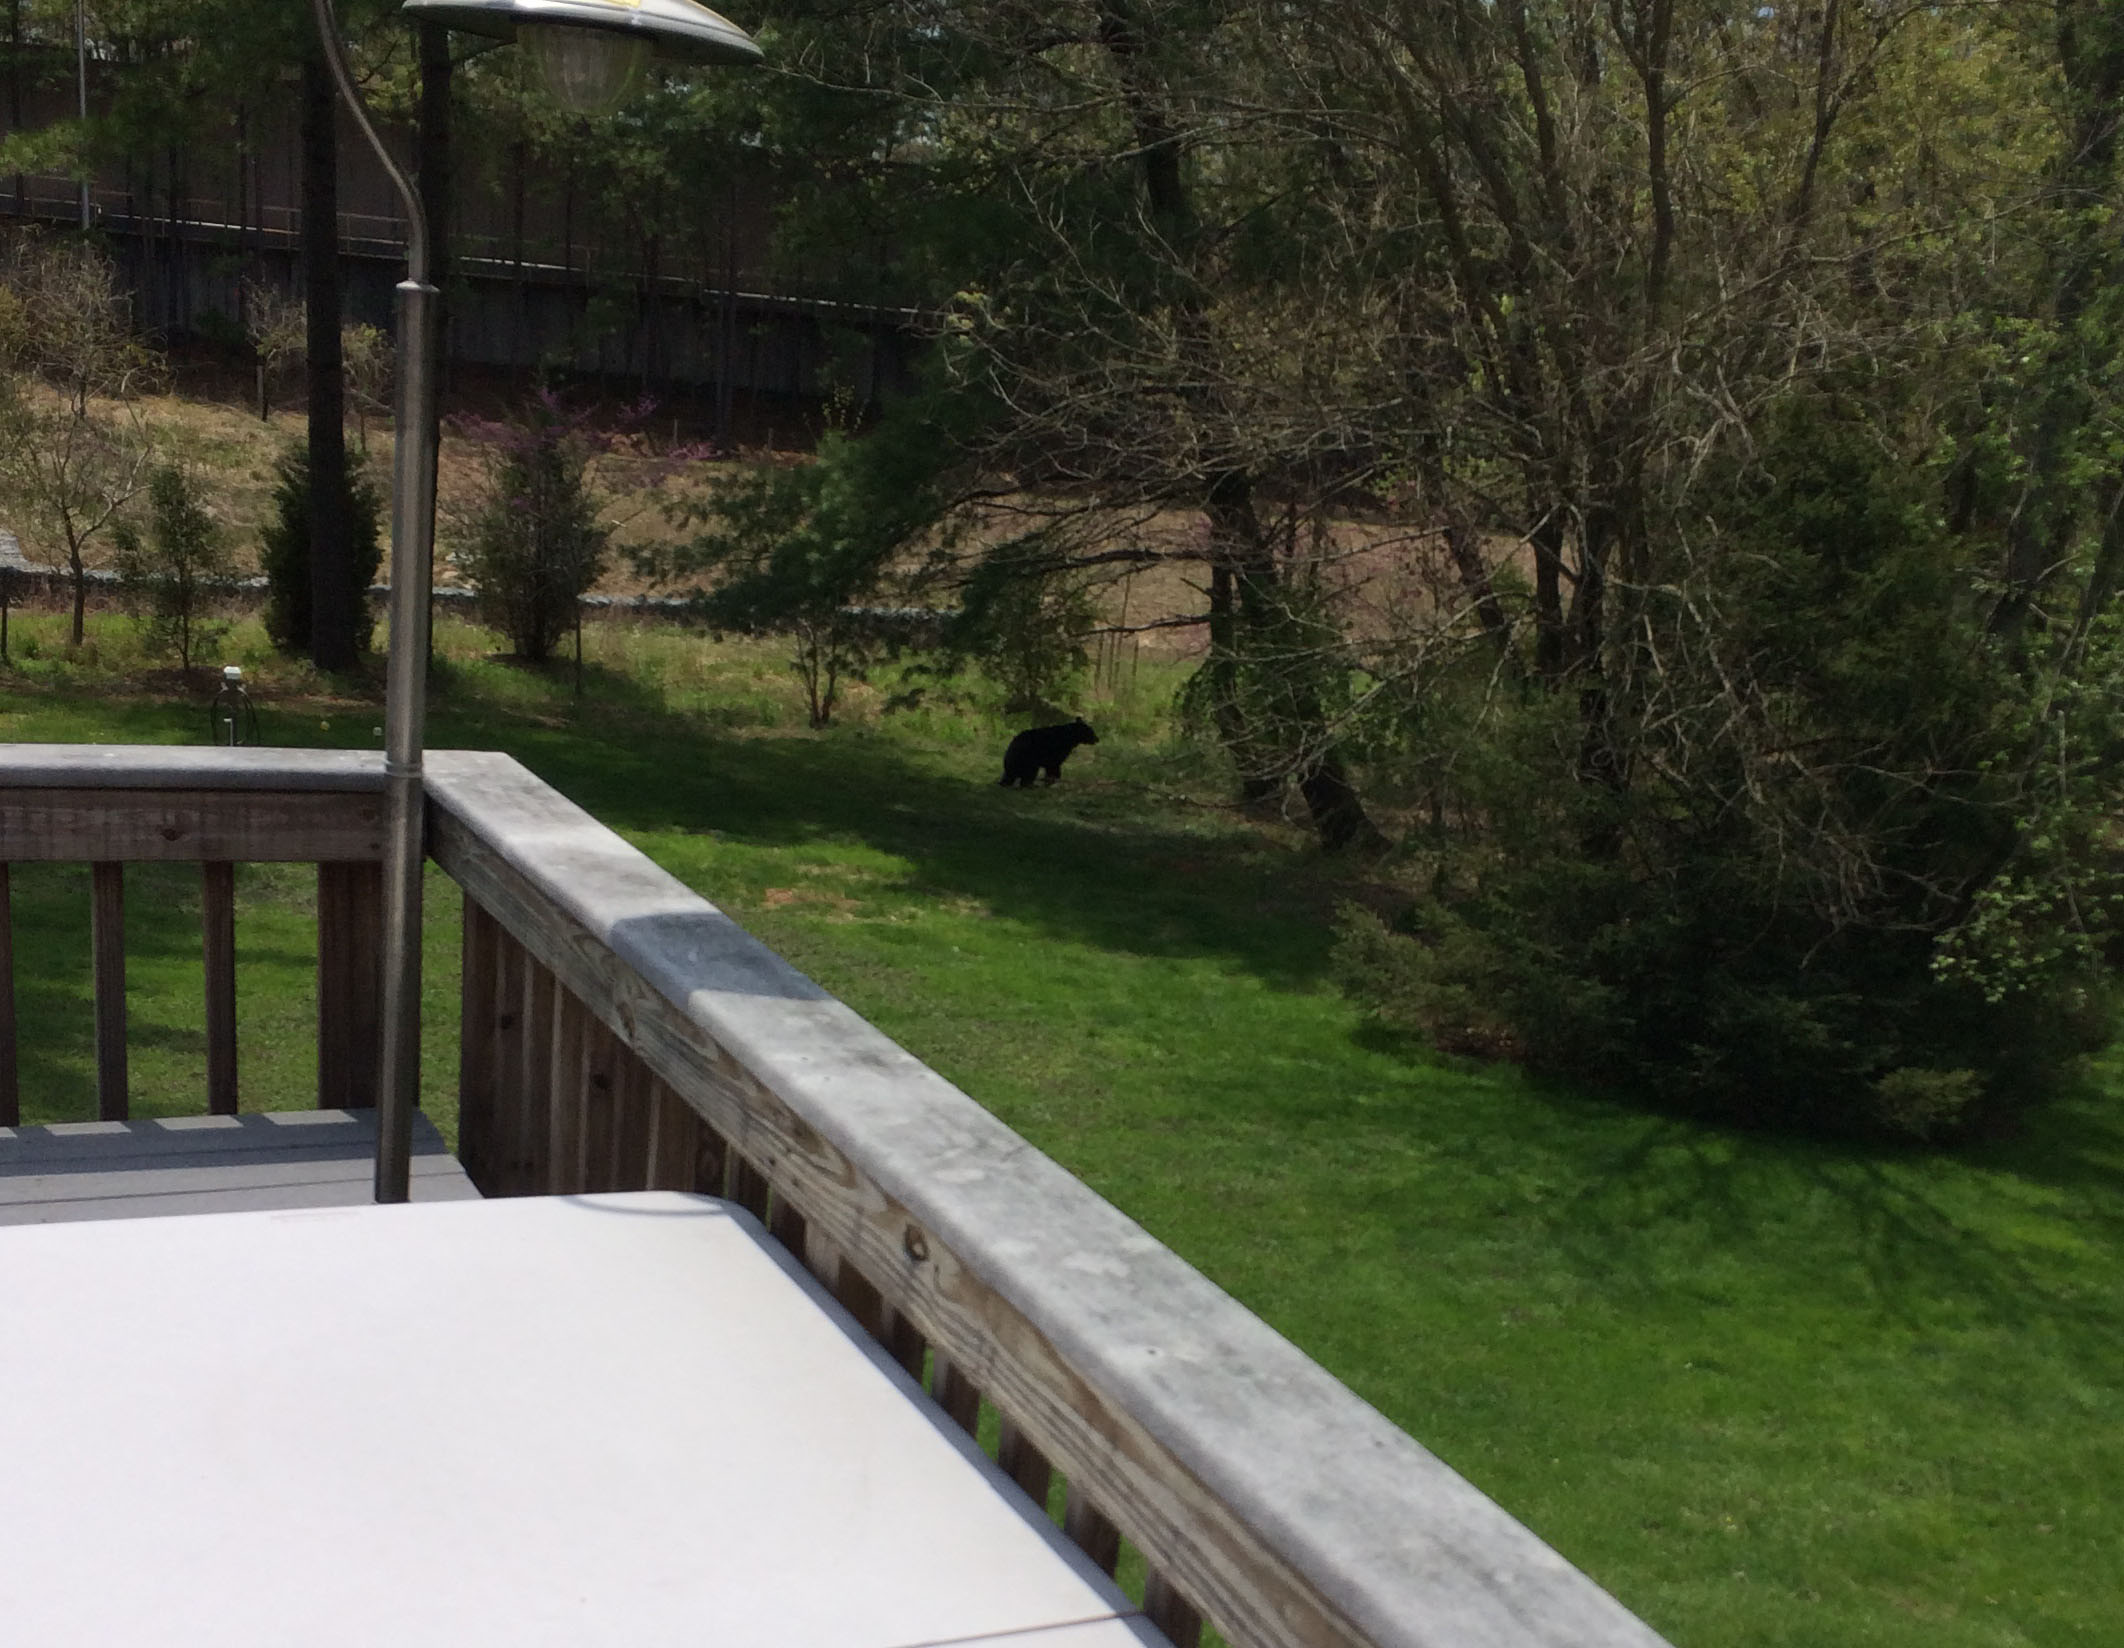 Black bears wander into Vienna backyard